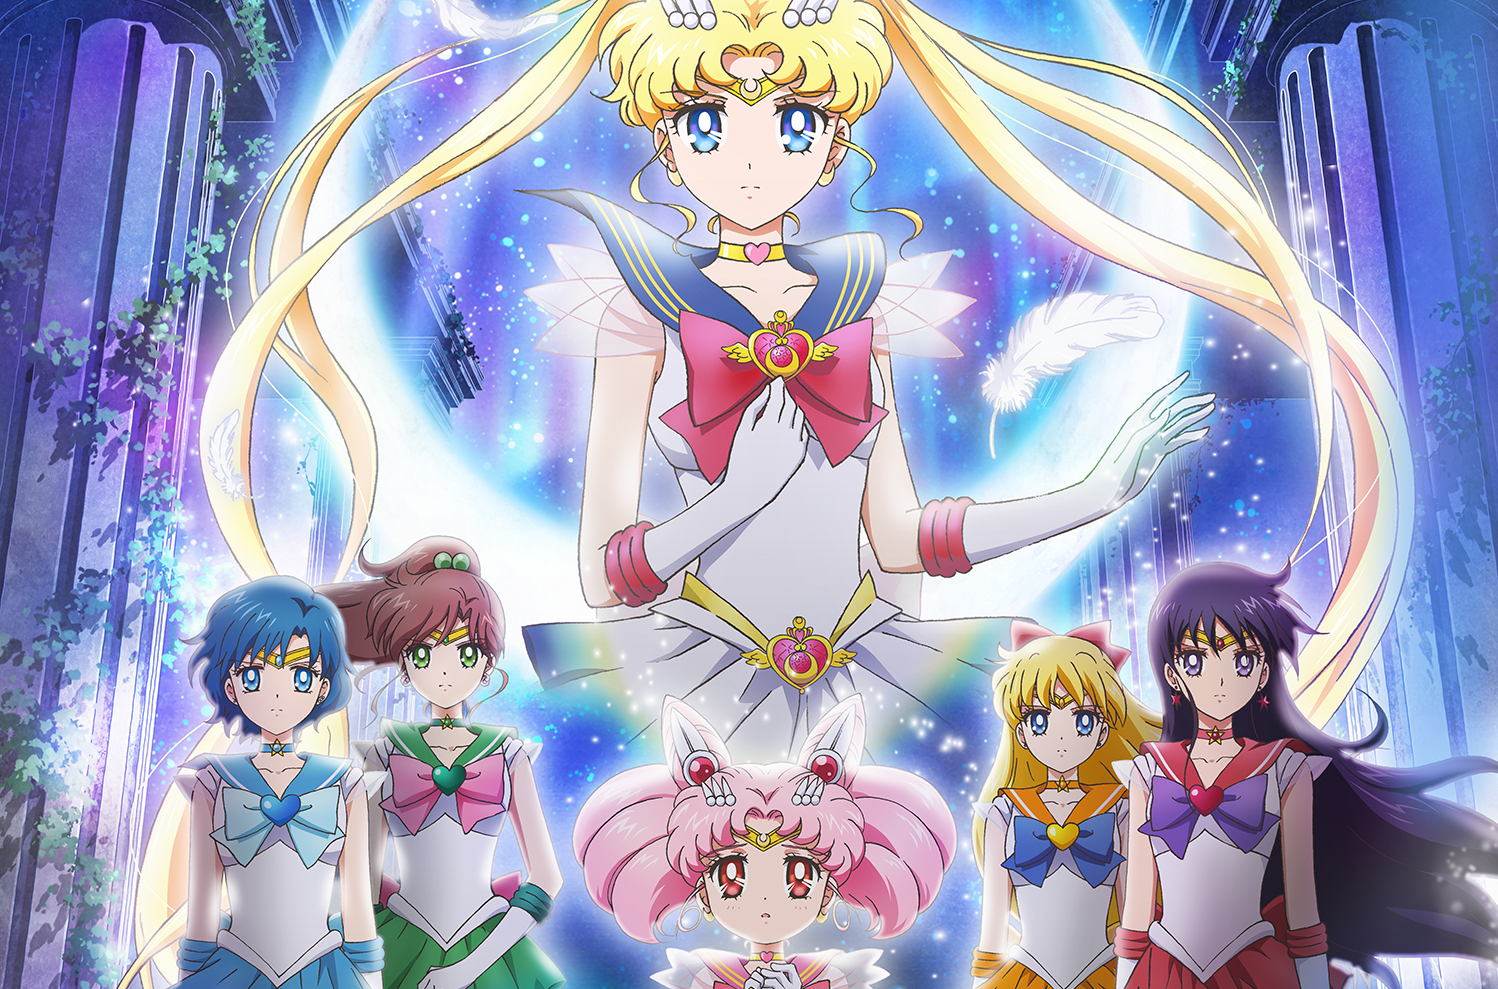 SILVER Princess Serenity - Sailor Moon Crystal by Teo-Hoble on DeviantArt